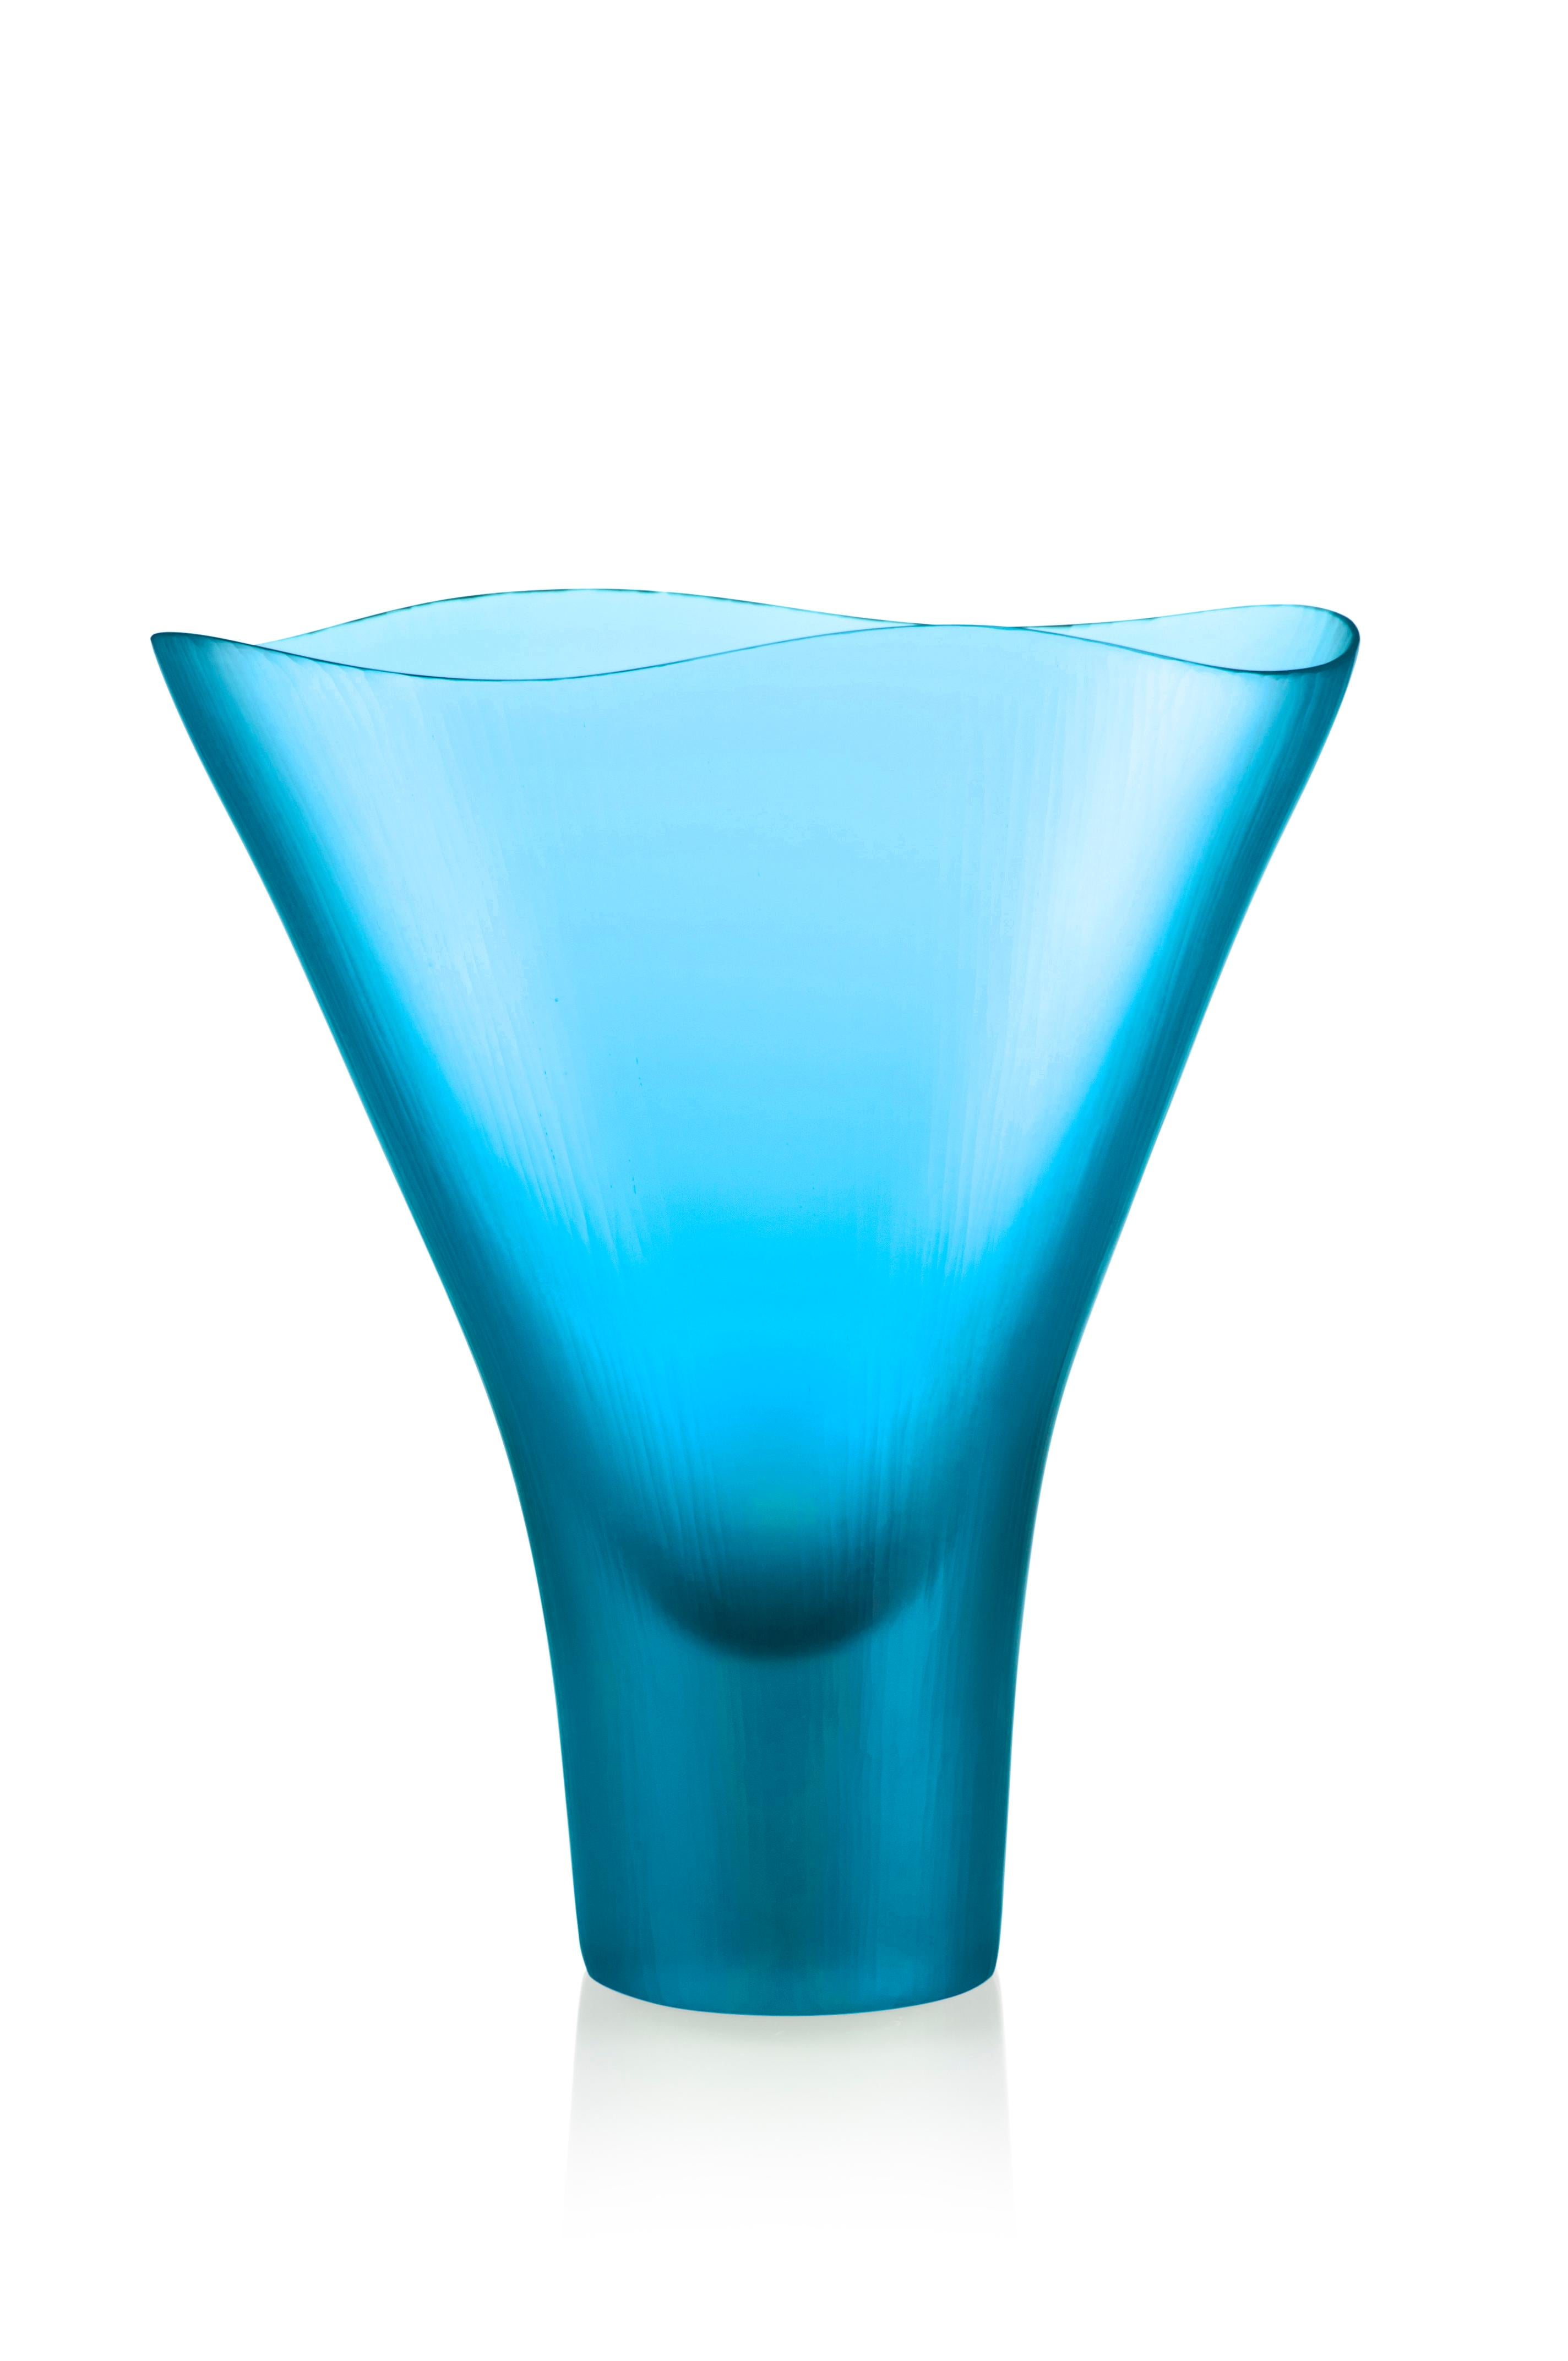 Venini Battuti glass series by Tobia Scarpa and Ludovico Diaz de Santillana. Indoor use only.

Dimensions: Ø 35 cm, H 45 cm.